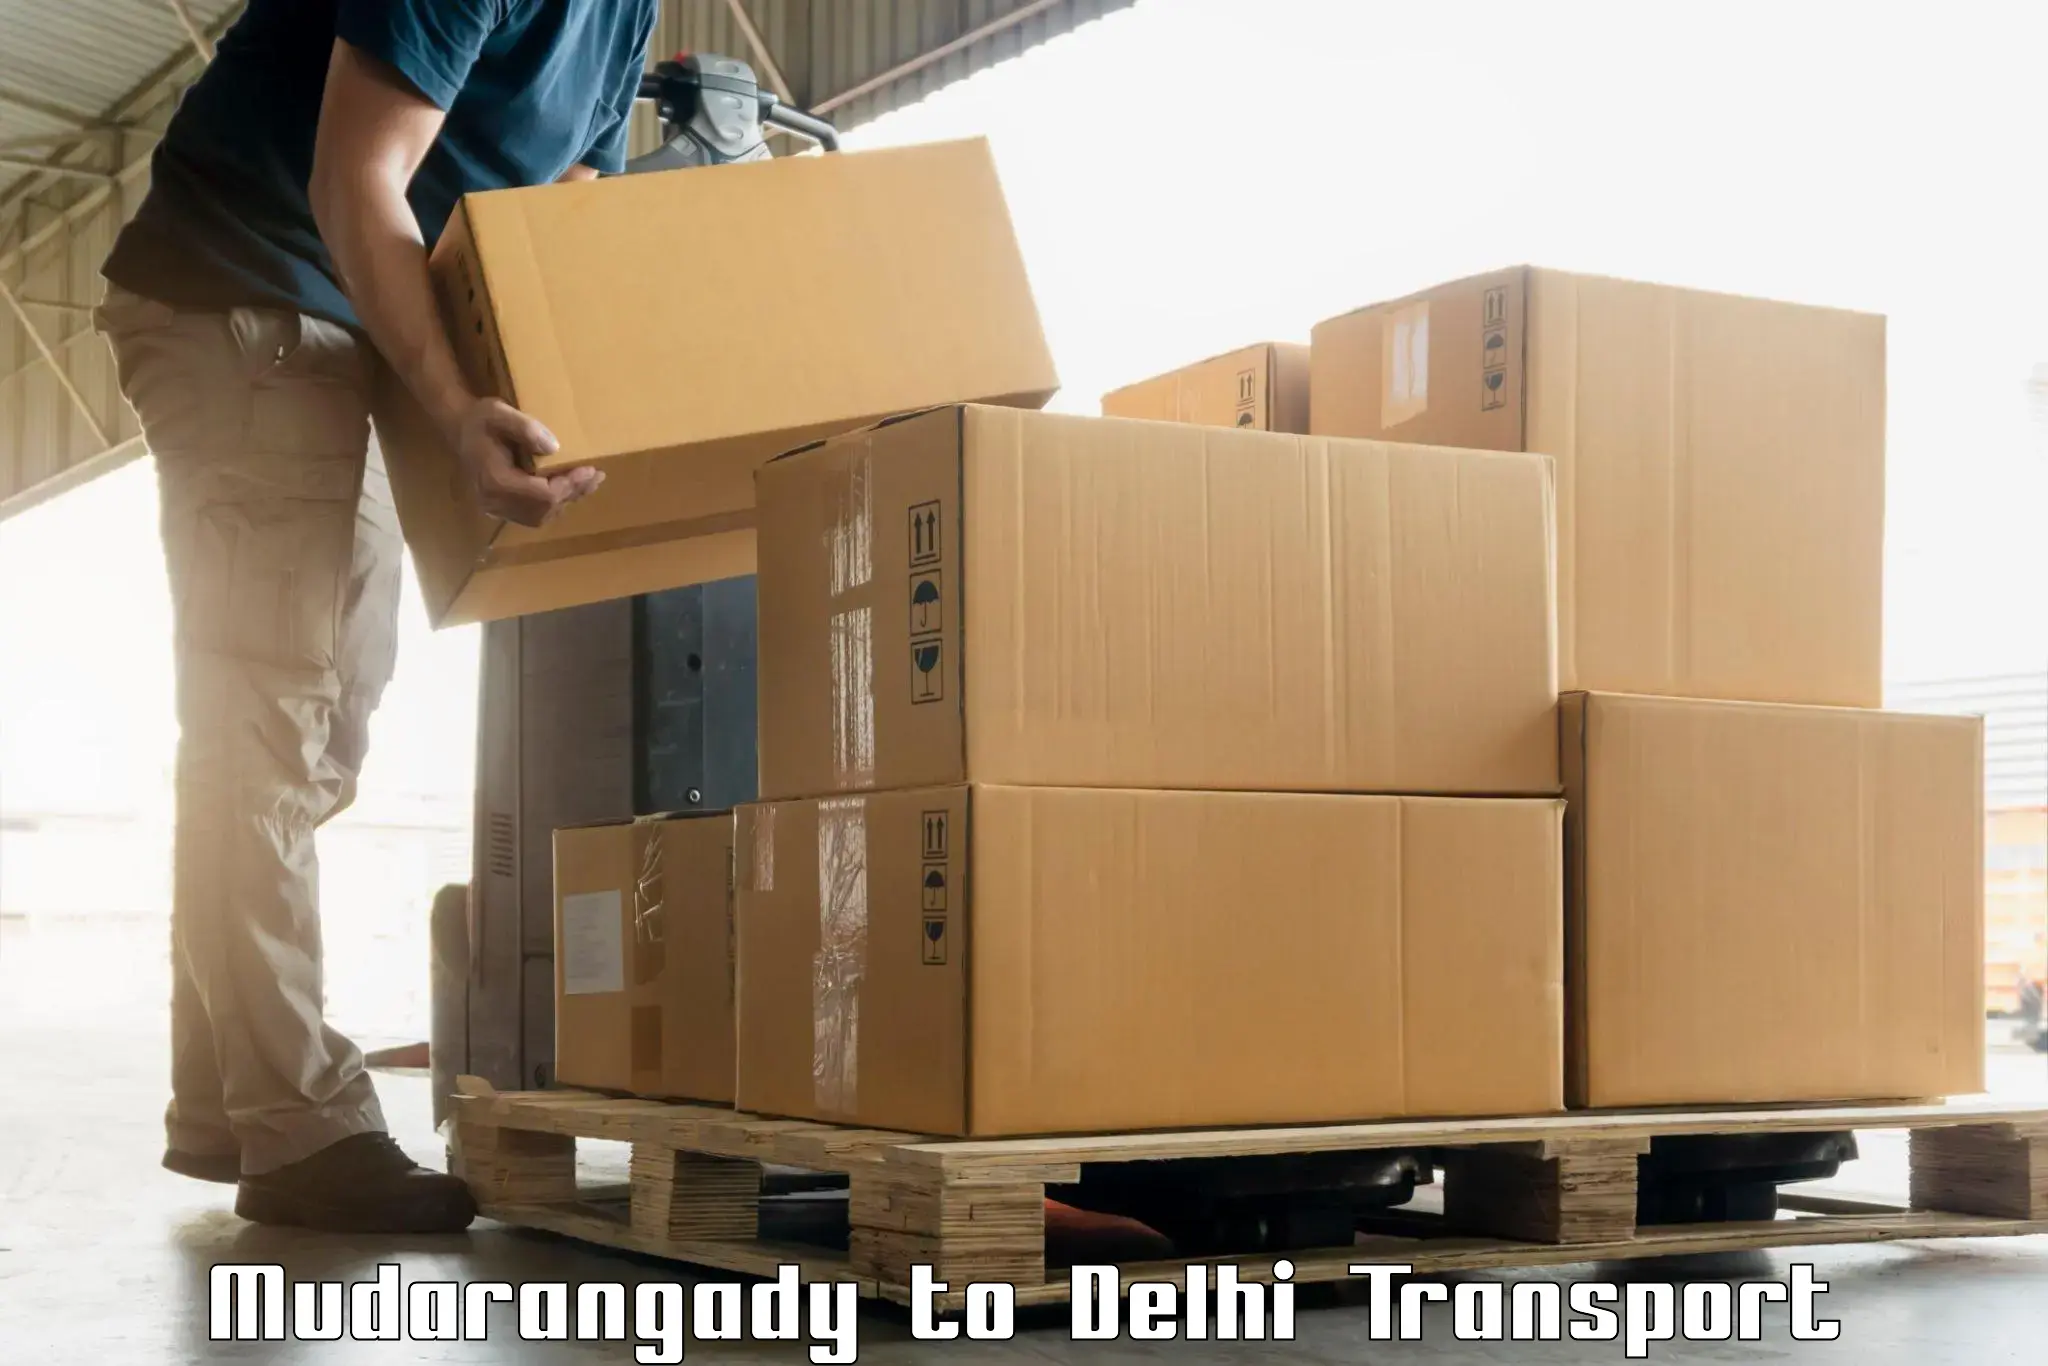 Delivery service Mudarangady to Ashok Vihar